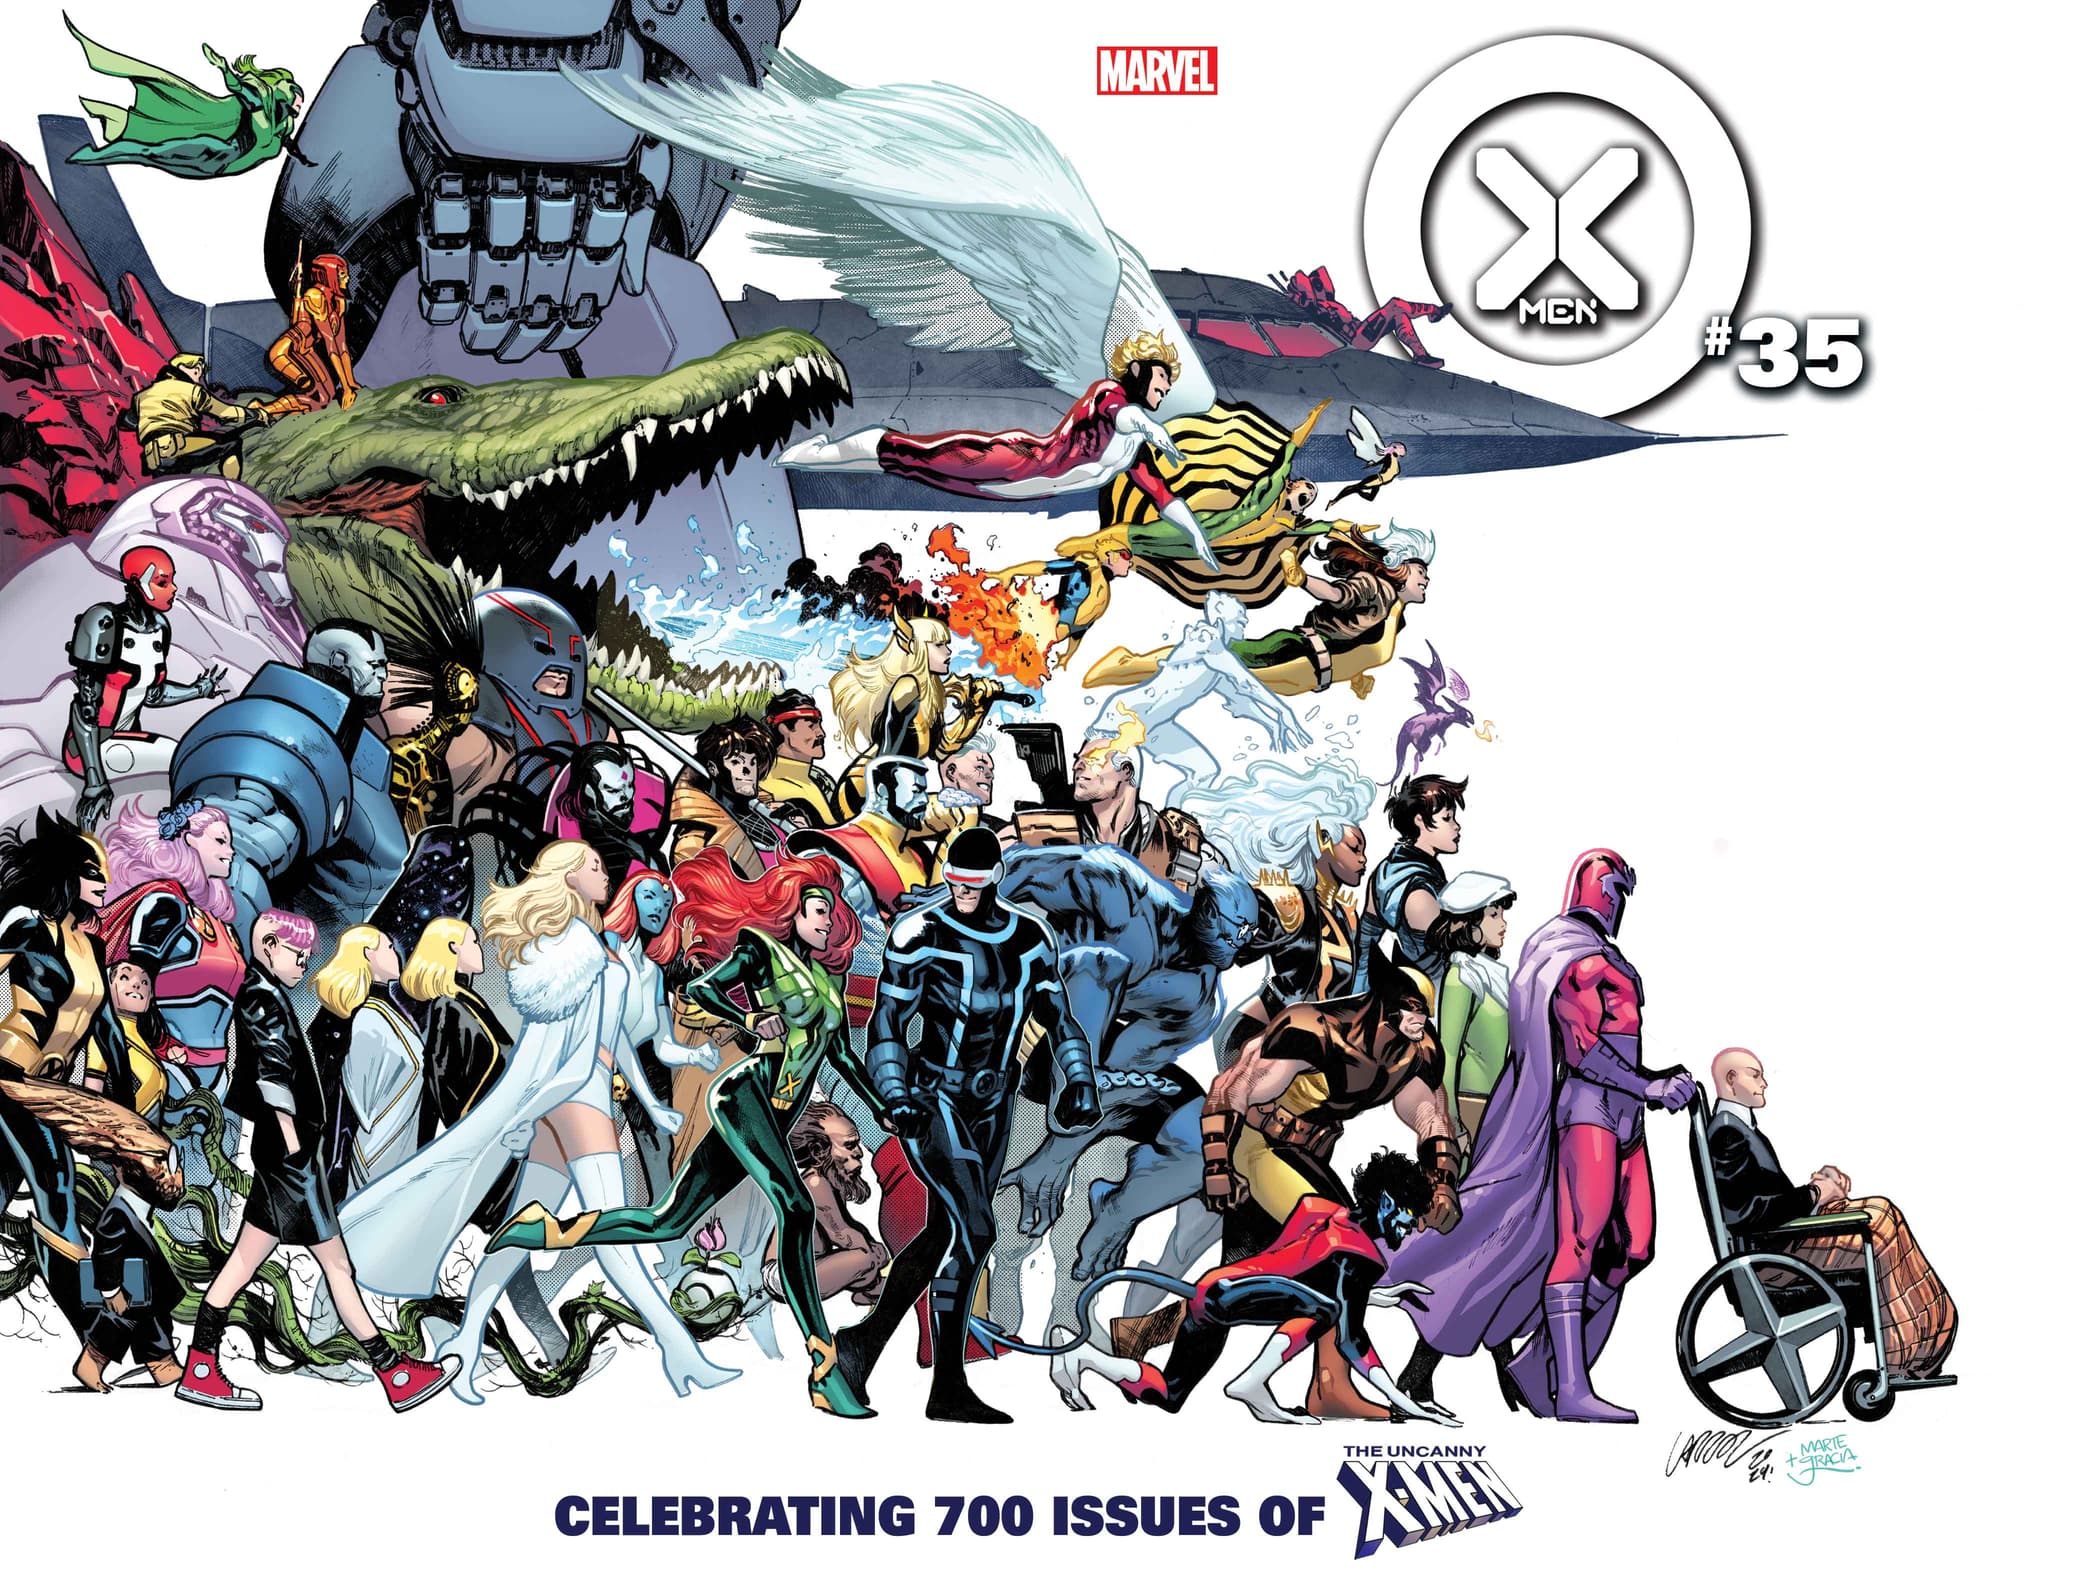 X-Men #35 Wraparound Cover by Pepe Larraz